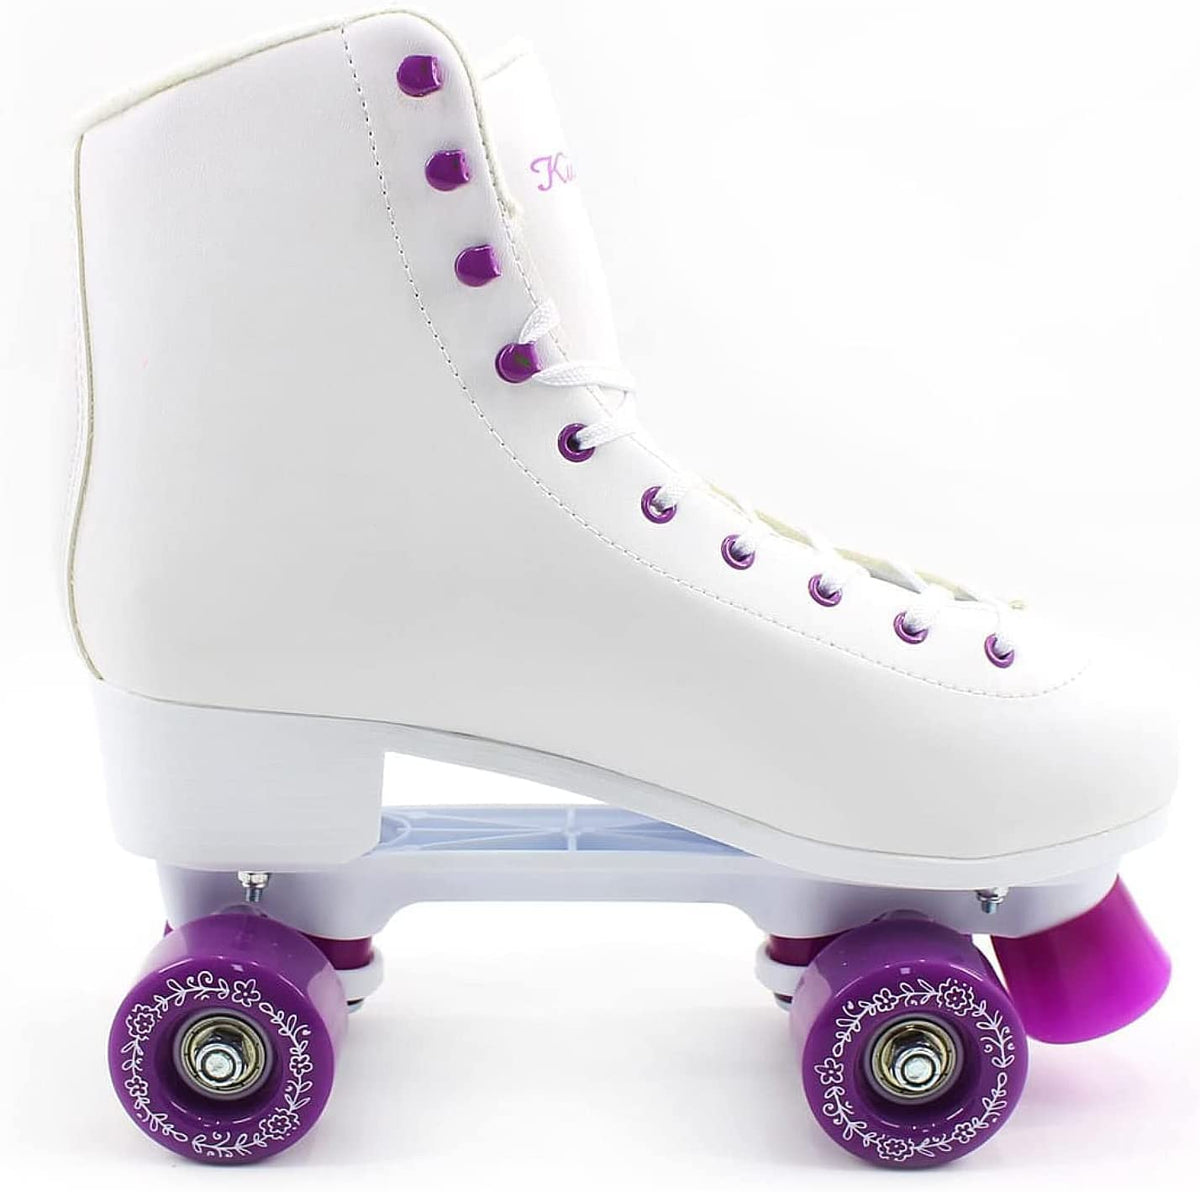 Kingdom GB Peony Roller Skates Flower Embroidered Quad Wheels White Purple